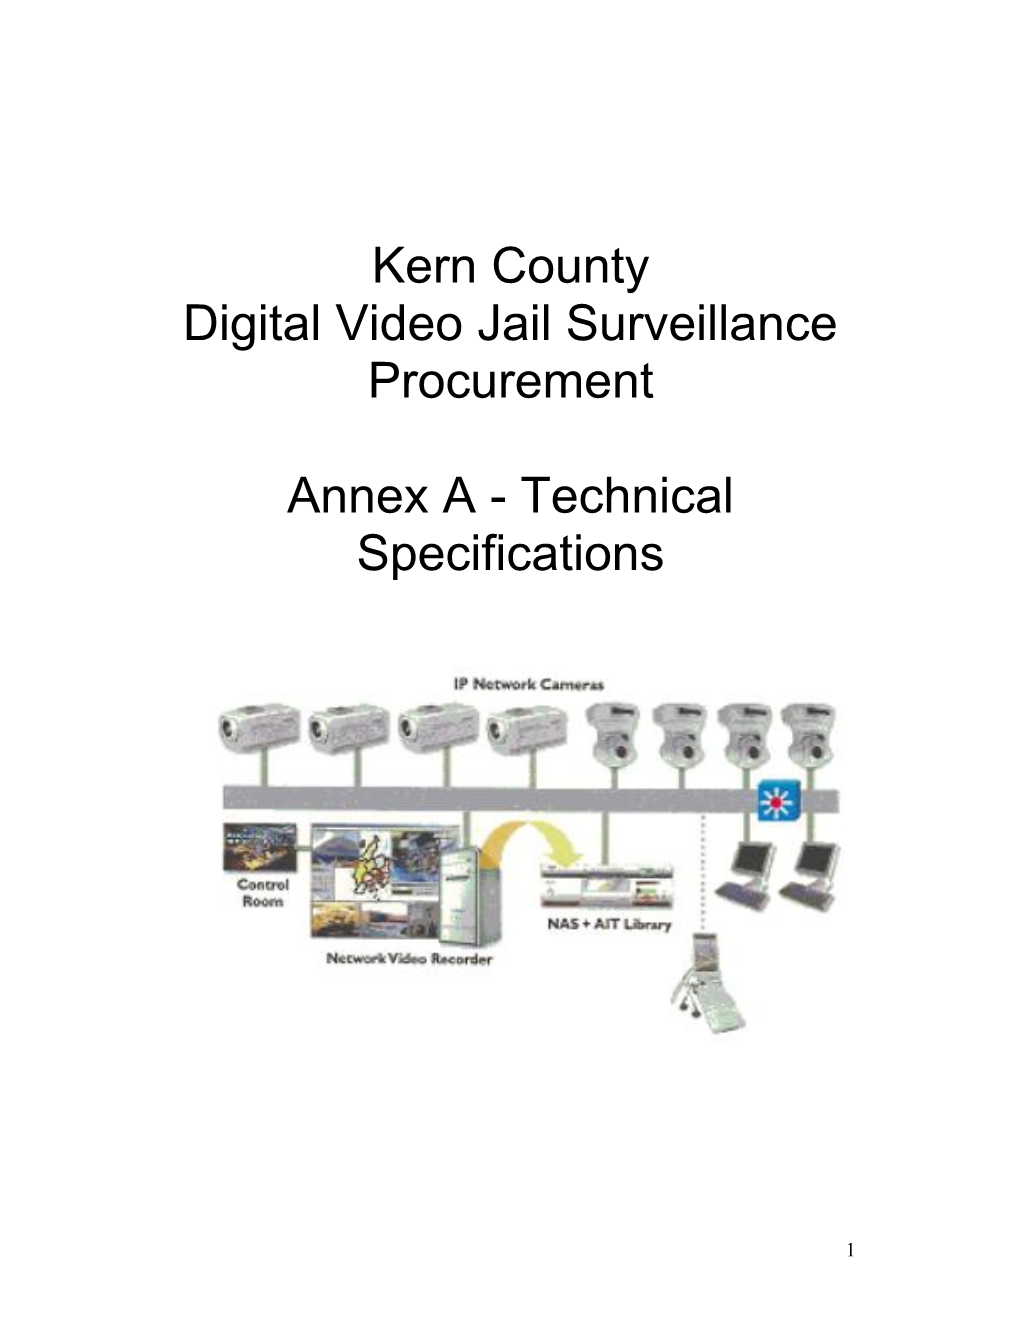 Digital Video Jail Surveillance Procurement